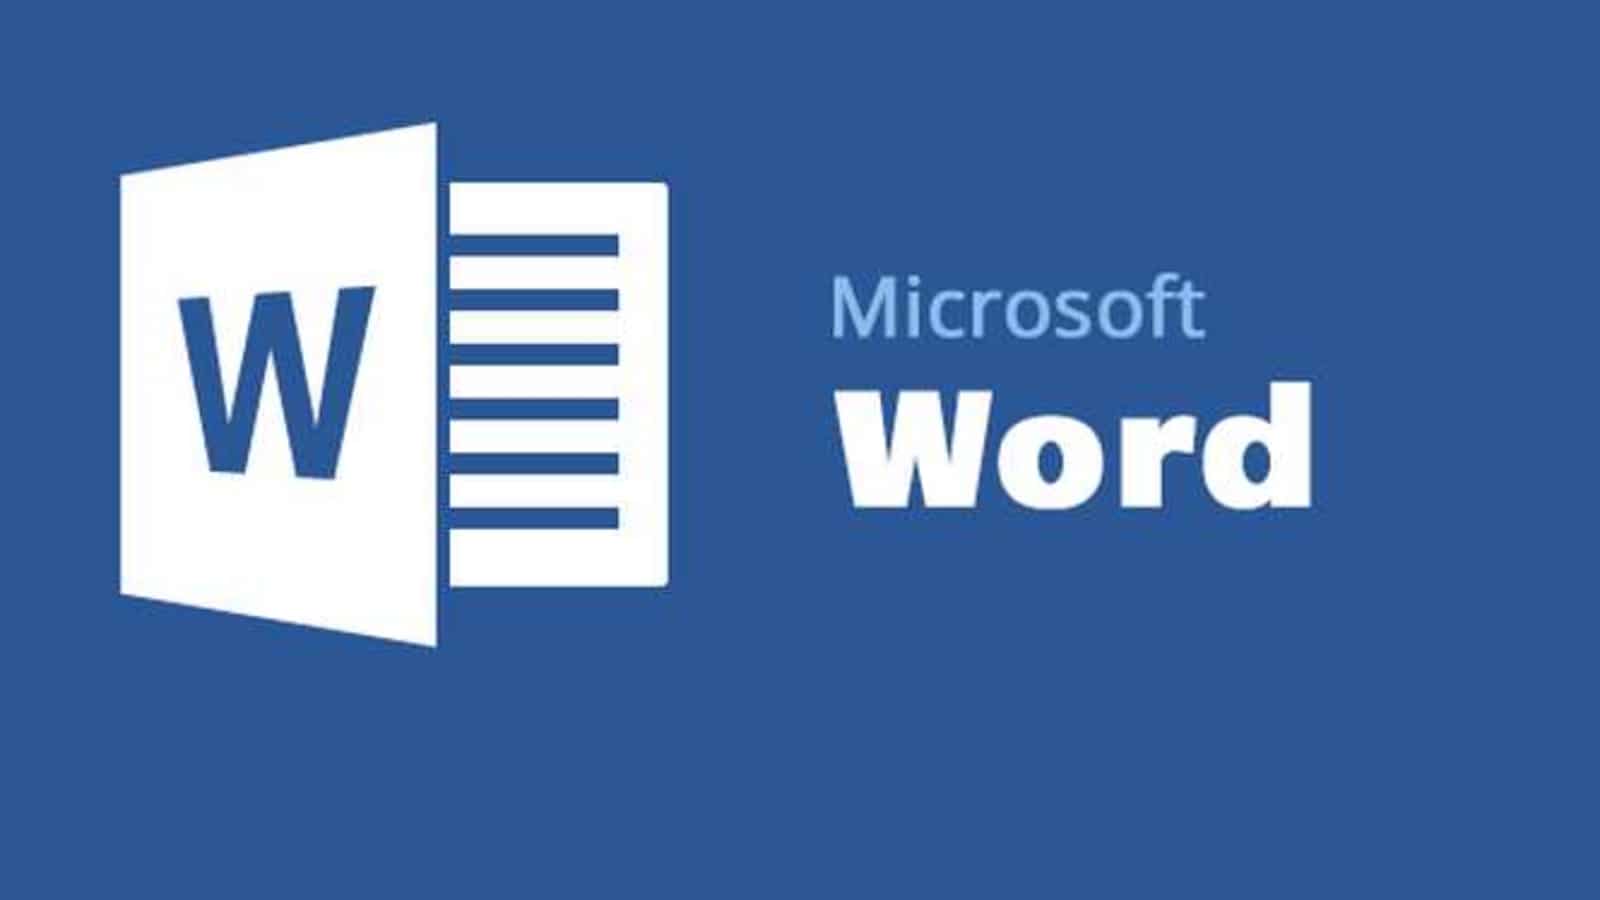 Ворд велл. Microsoft Office Word логотип. Майкрософт офис ворд значок. Вог РД. P Words.